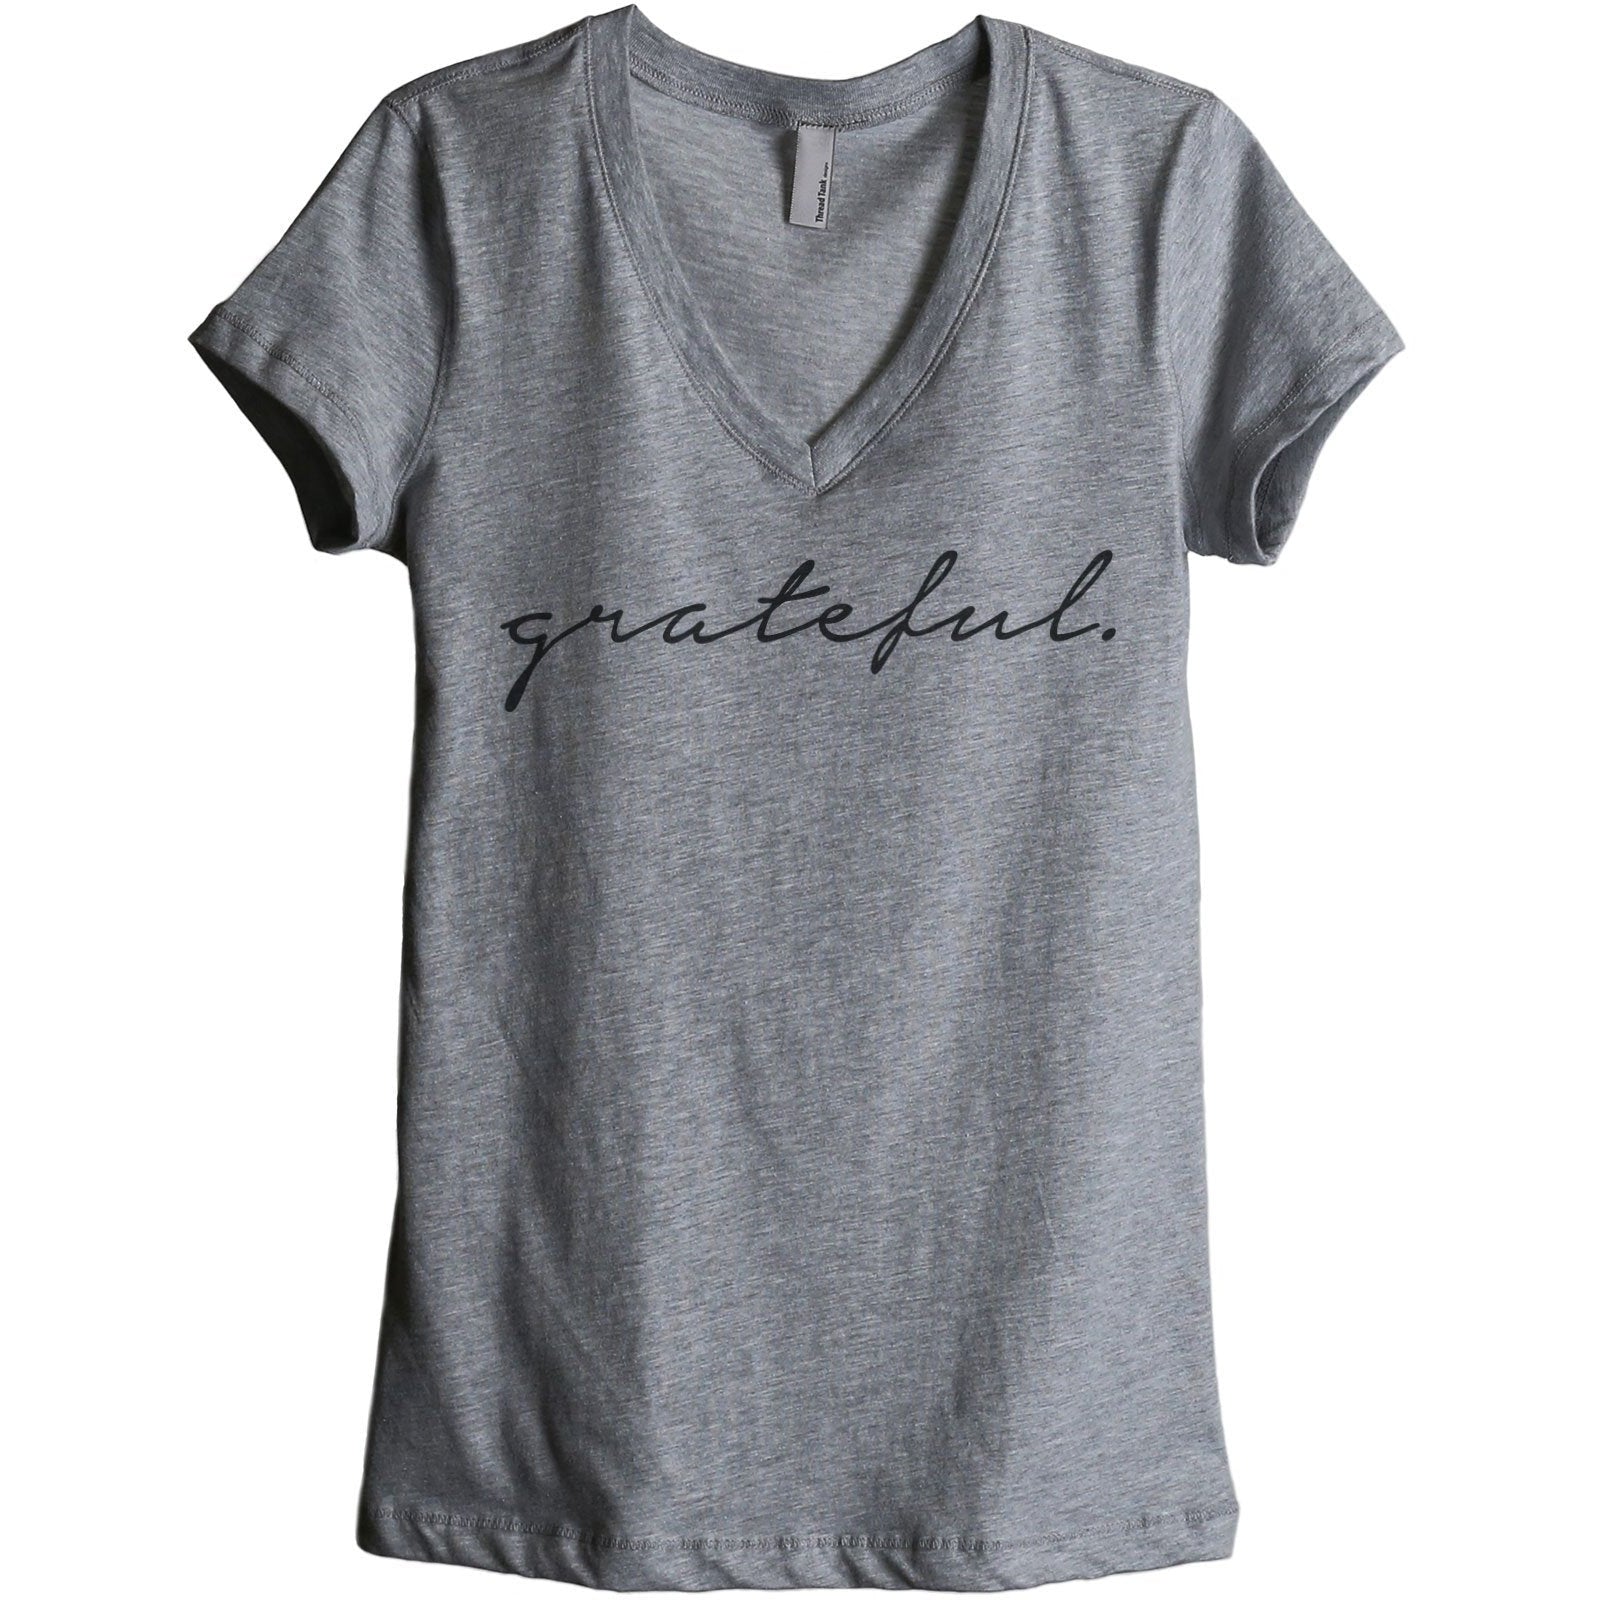 Grateful Women's Relaxed V-Neck T-Shirt Tee Charcoal